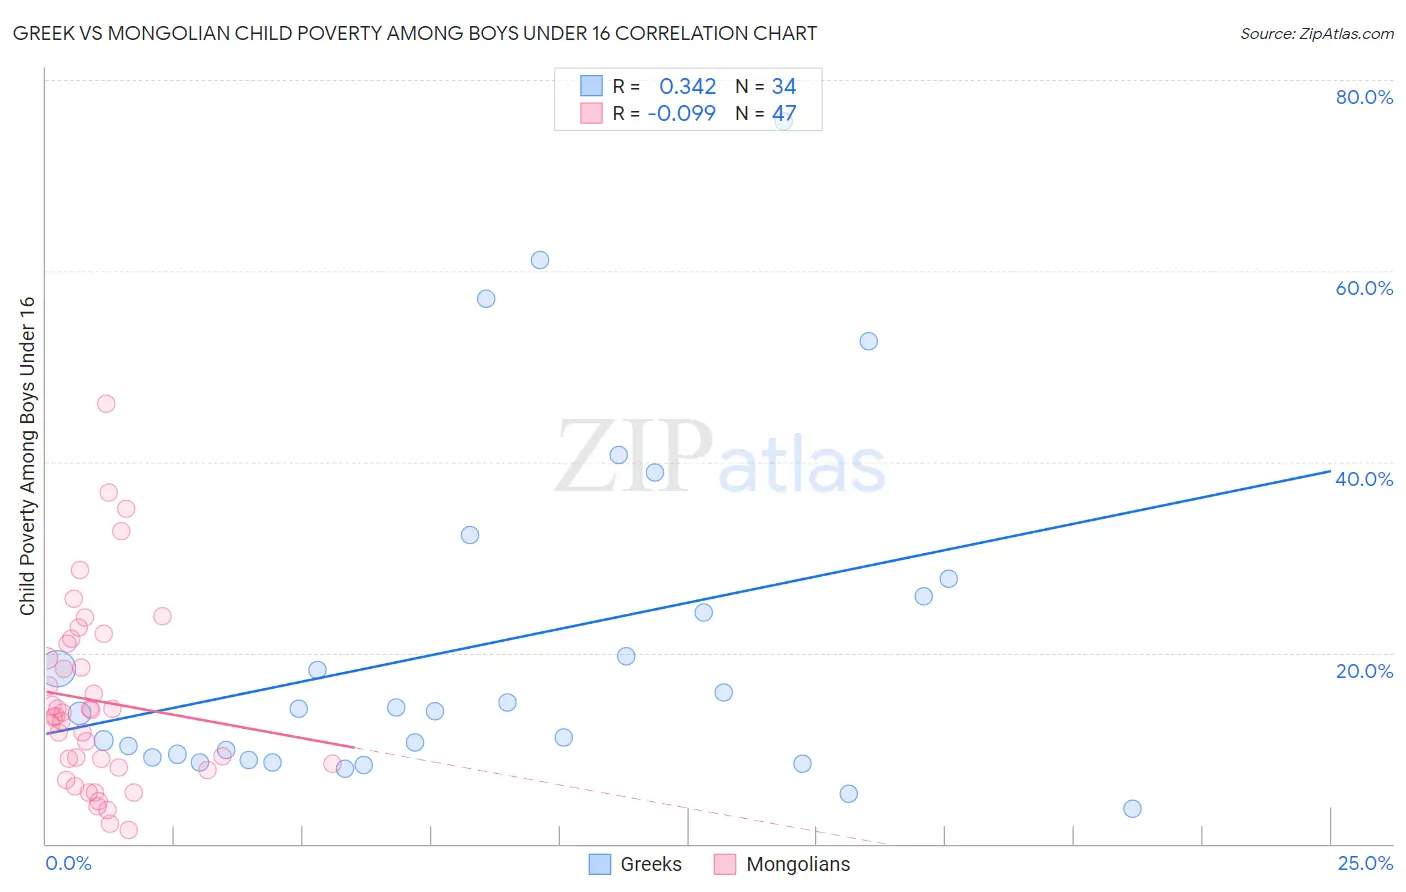 Greek vs Mongolian Child Poverty Among Boys Under 16